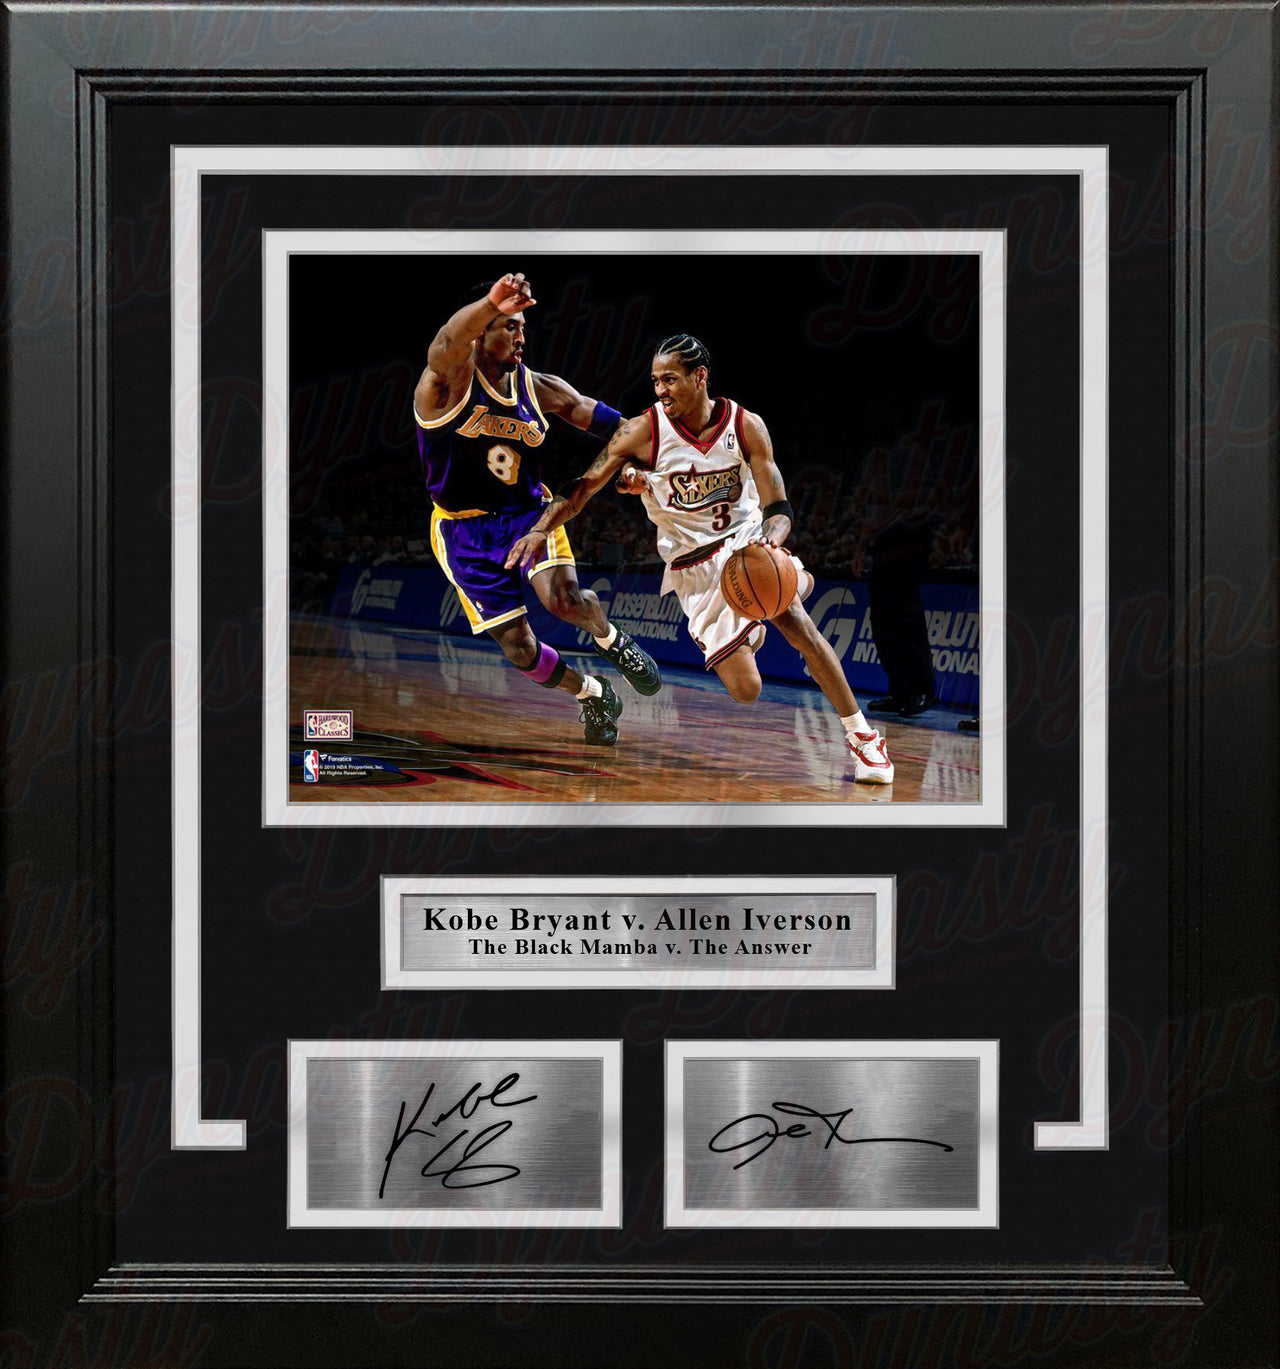 Kobe Bryant v. Allen Iverson 8" x 10" Framed Basketball Photo with Engraved Autographs - Dynasty Sports & Framing 